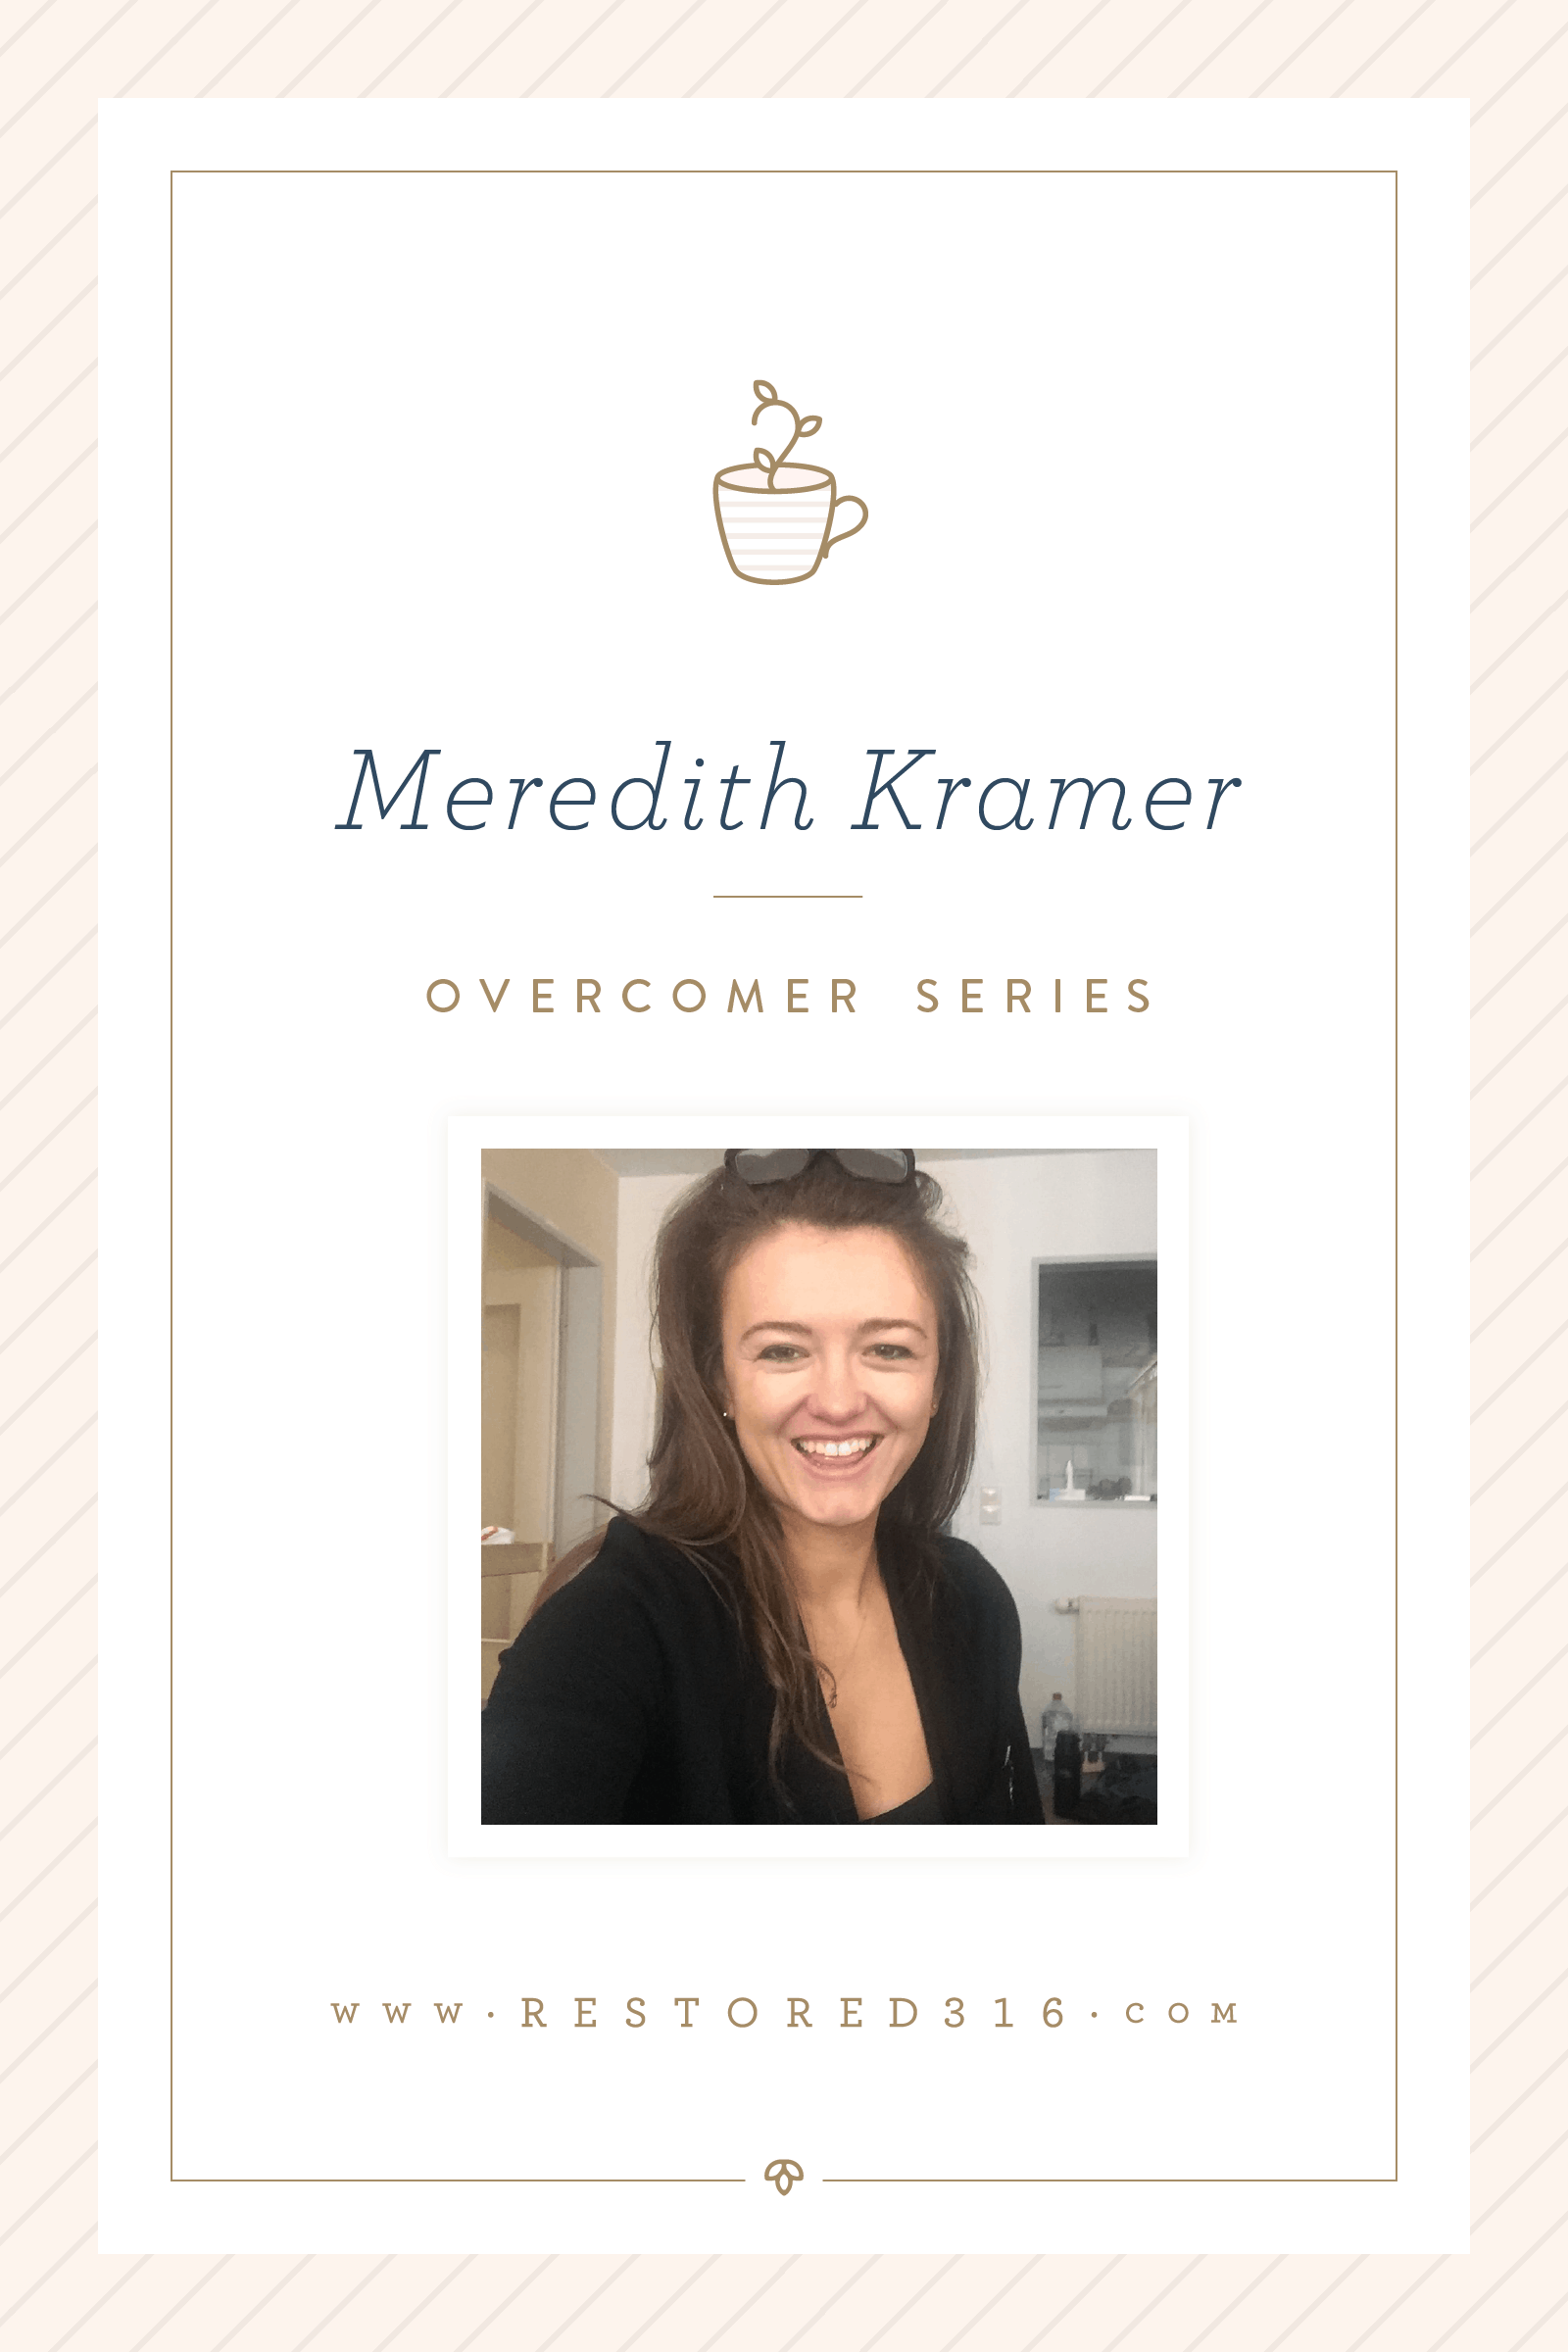 Overcomer Series with Meredith Kramer